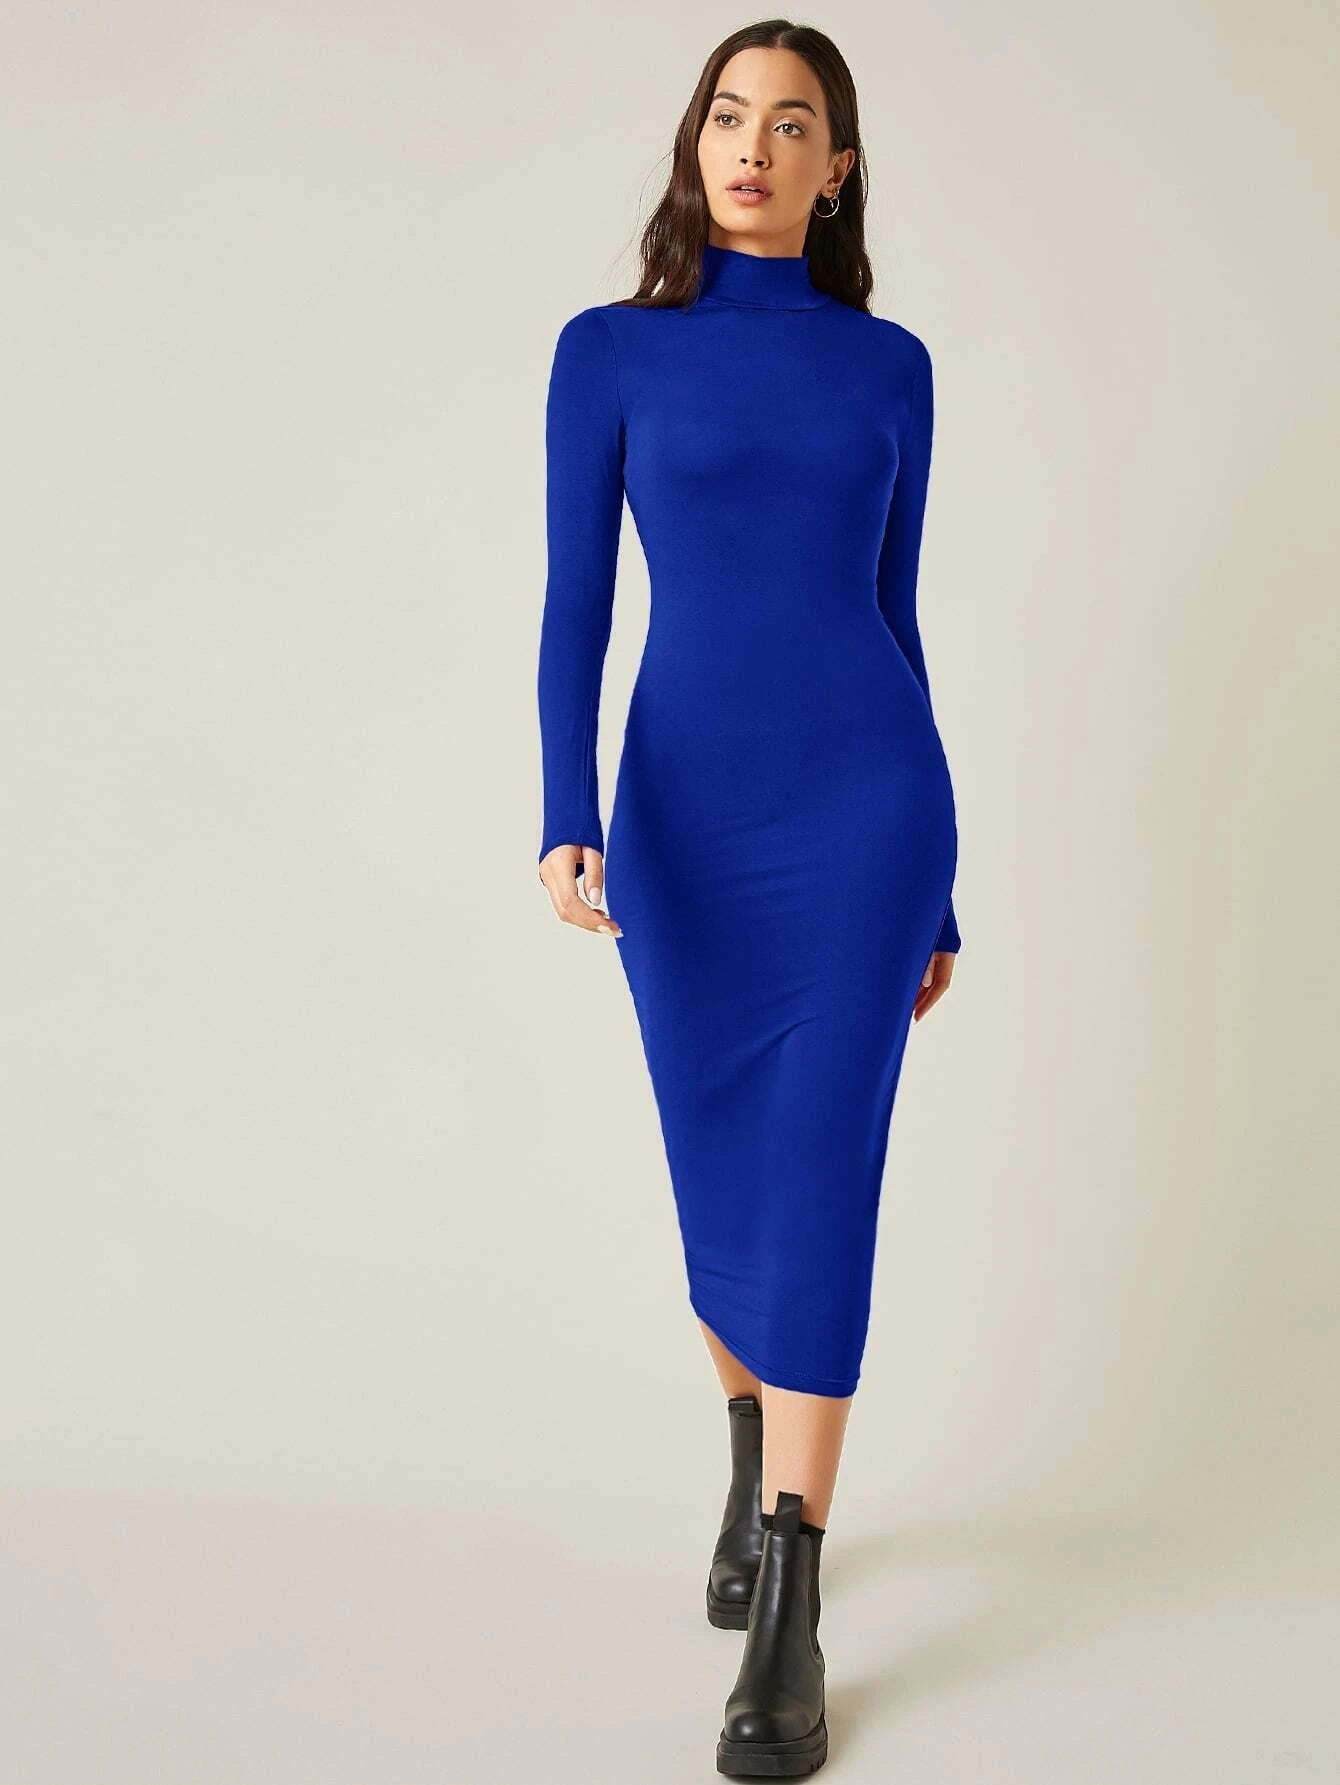 SHEIN BASICS High Neck Solid Bodycon Dress – Urban Chic